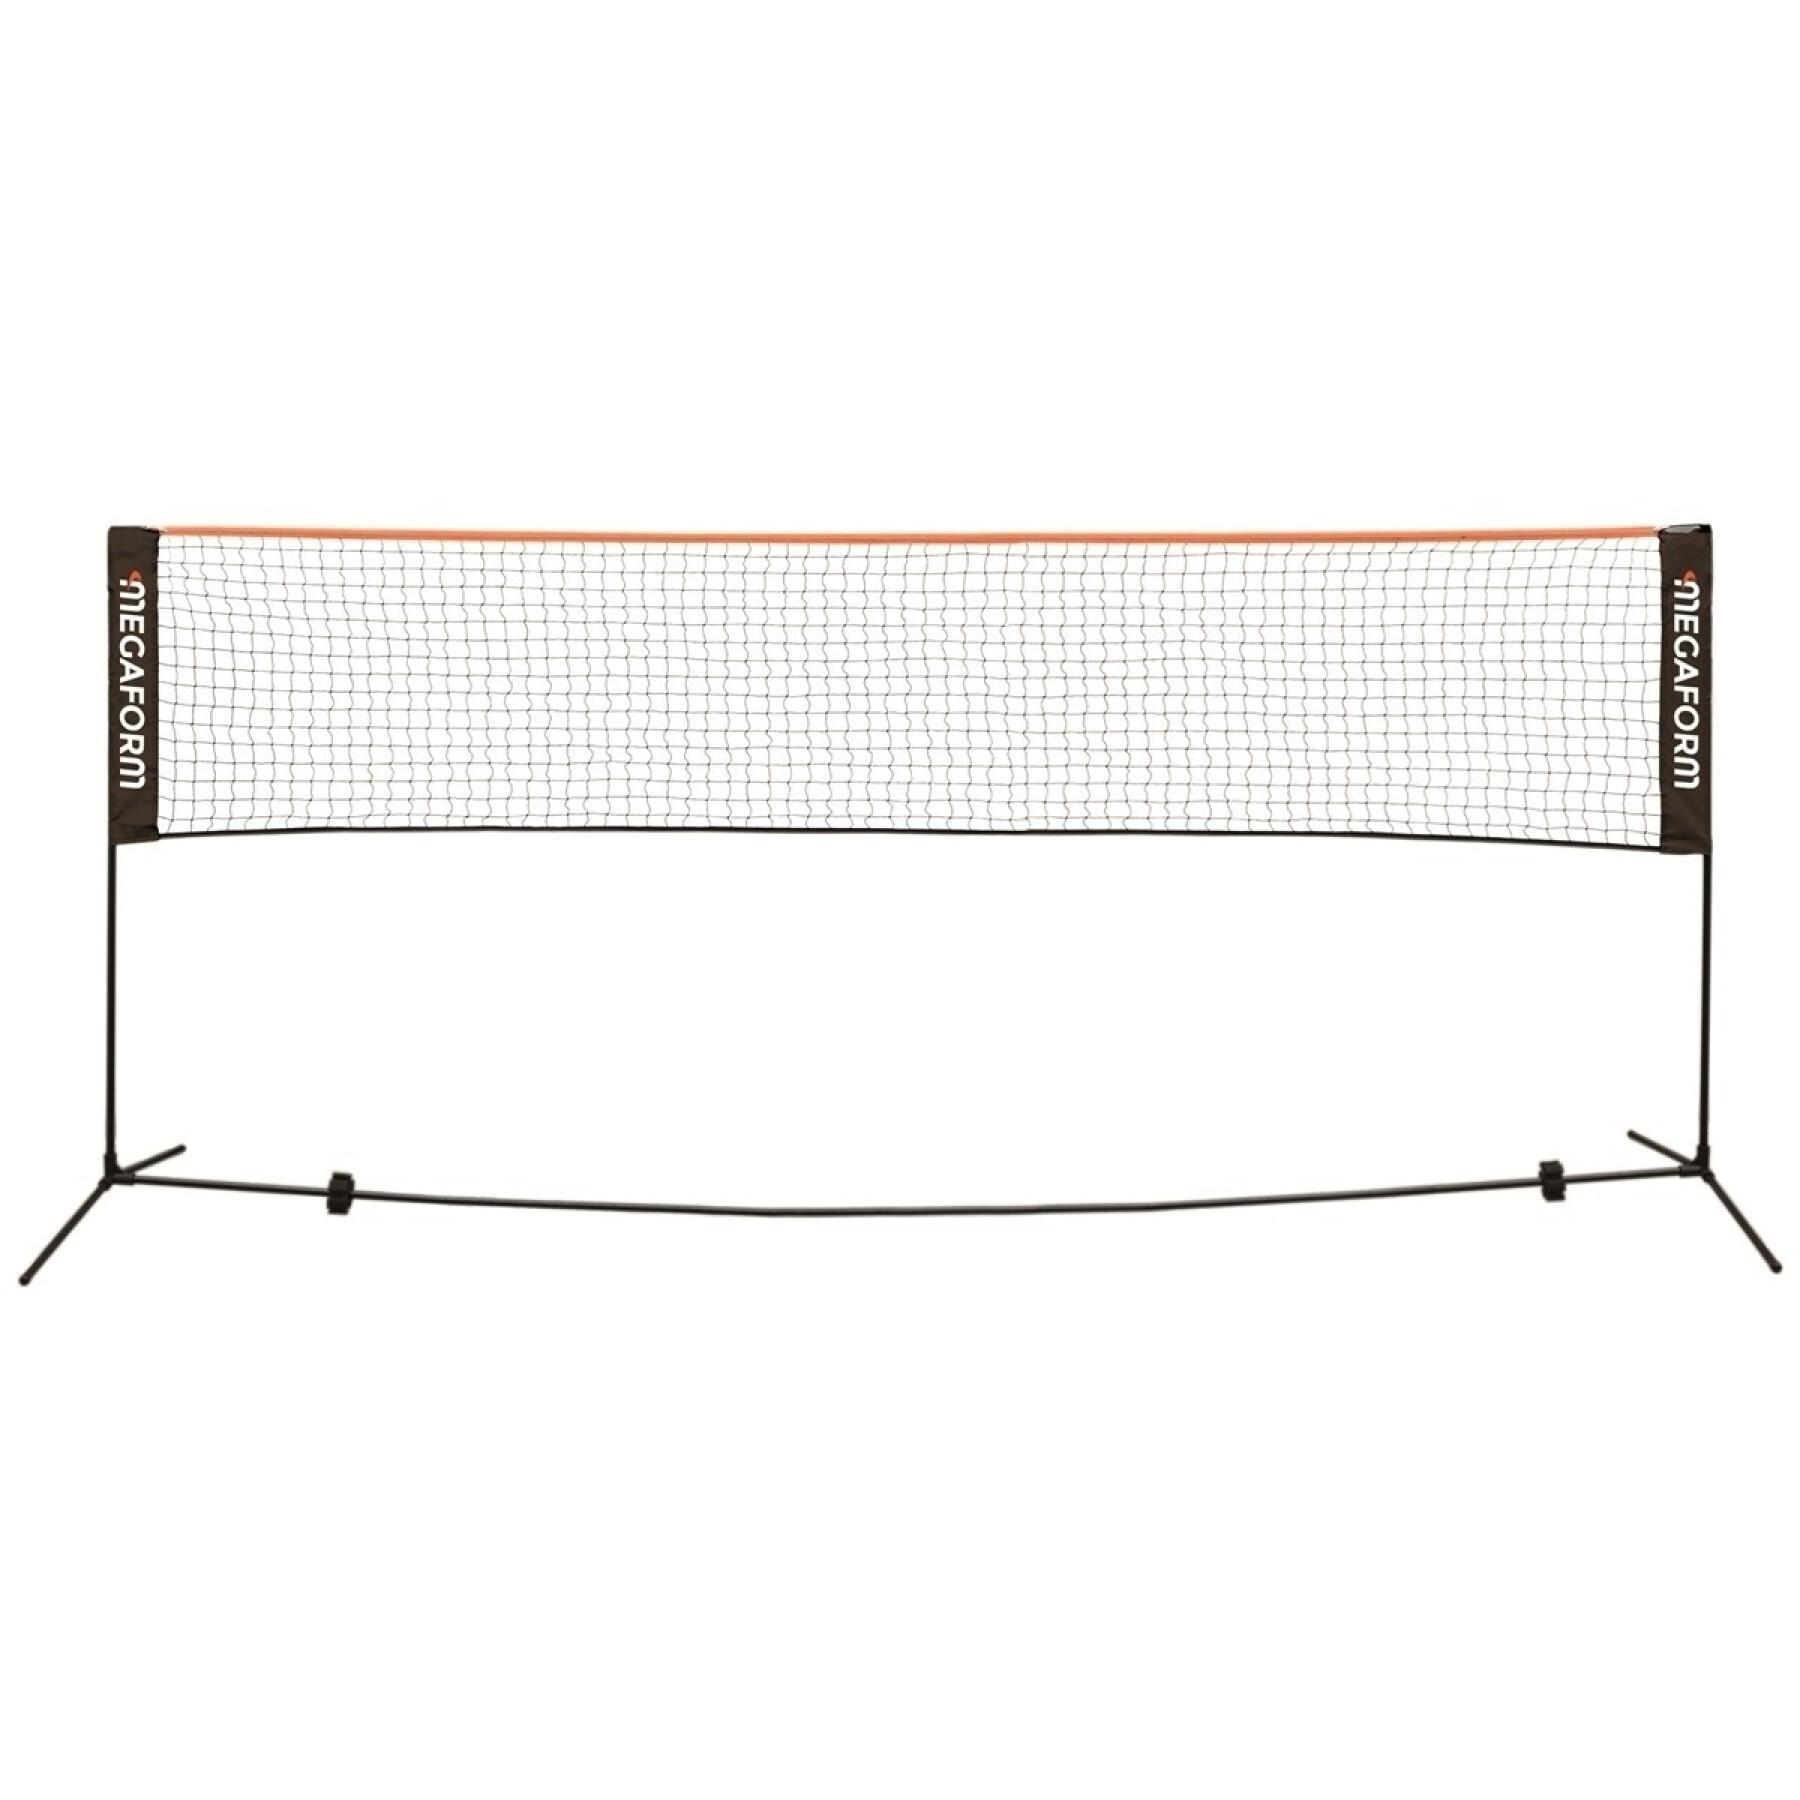 Rede portátil de badminton e mini ténis Megaform